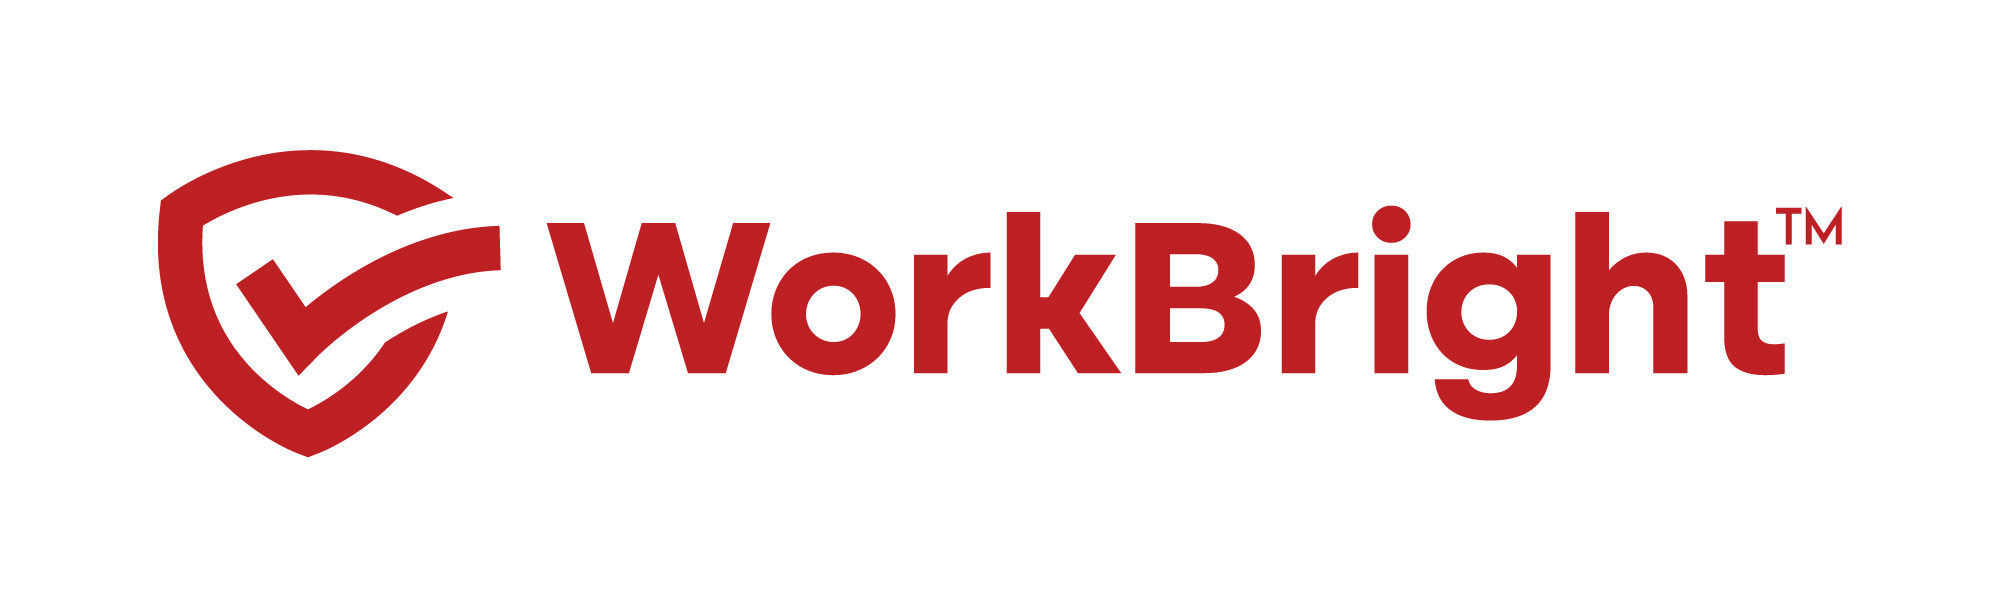 WorkBright™